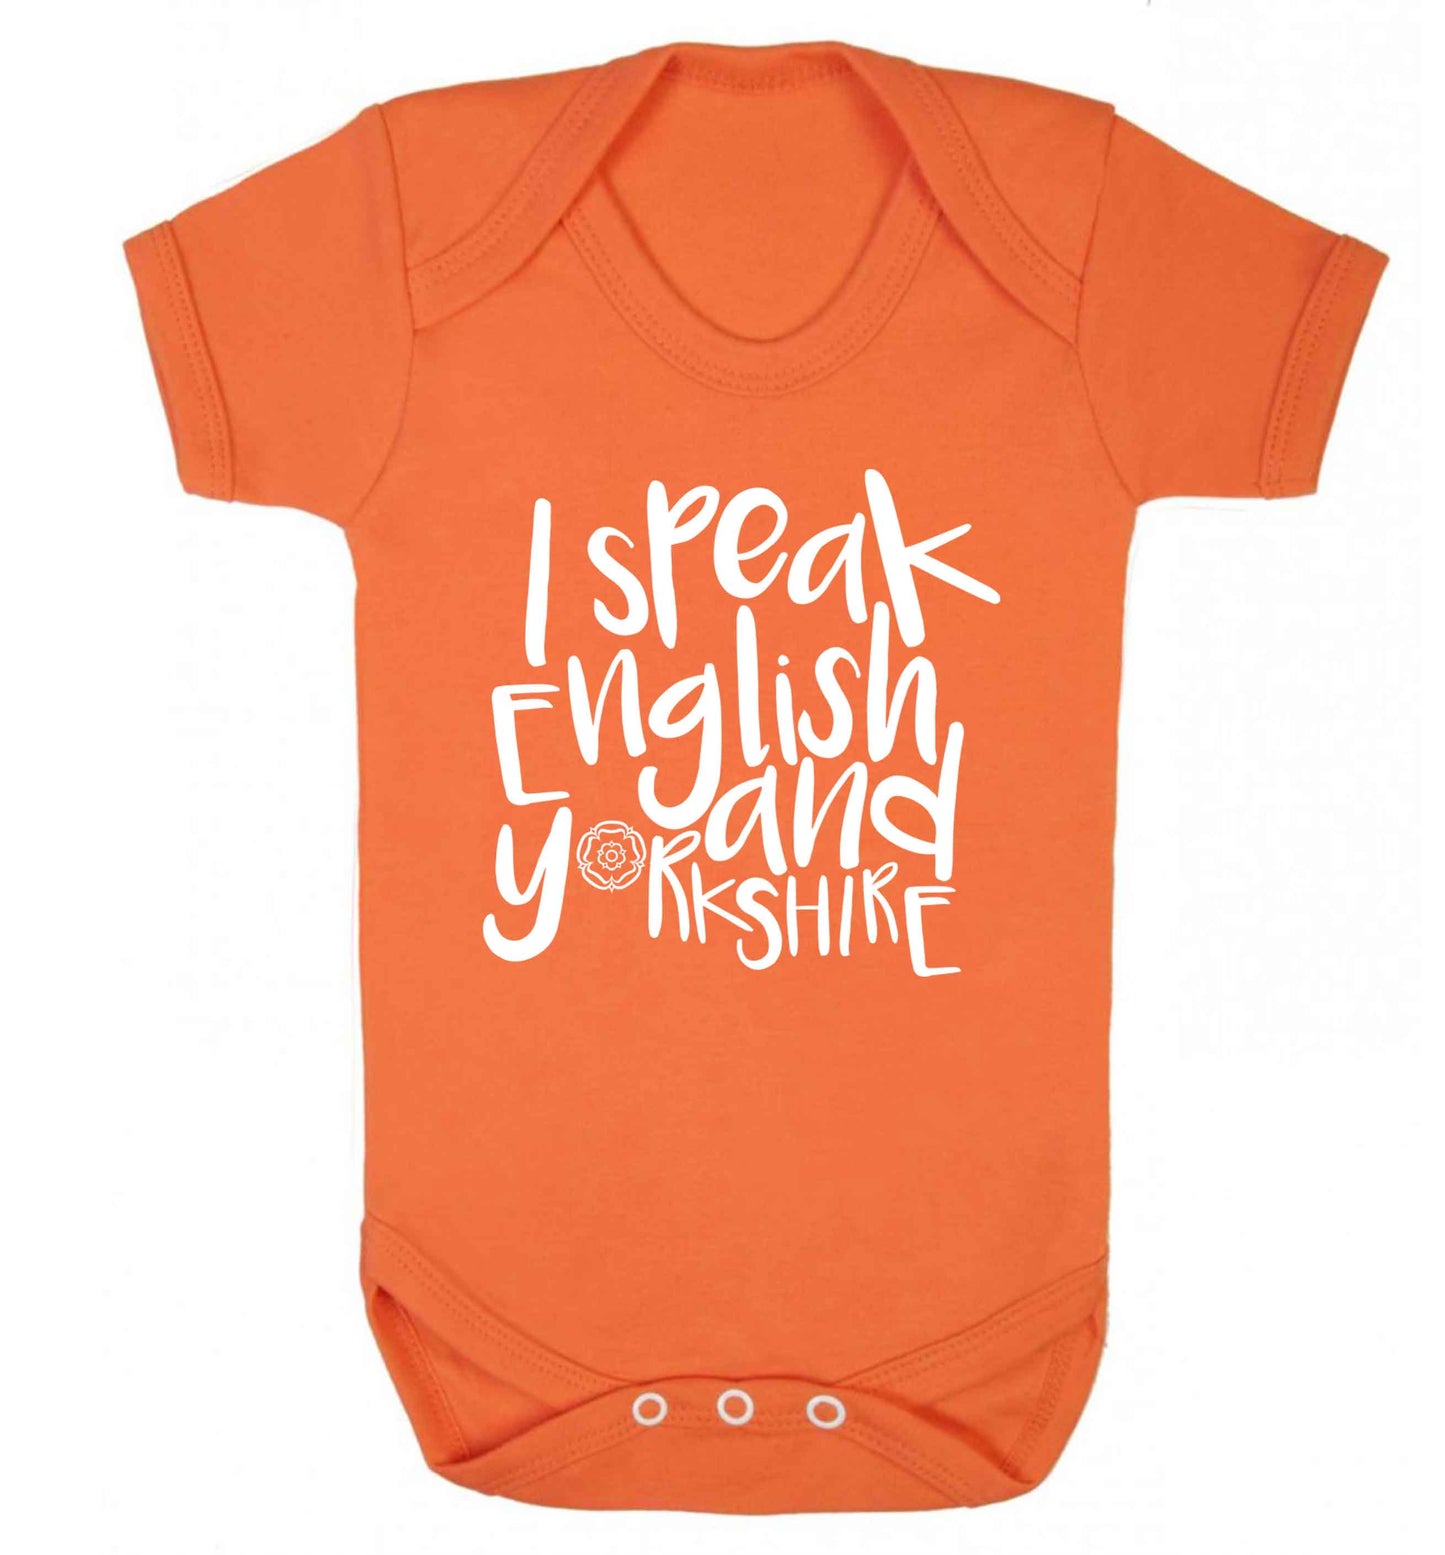 I speak English and Yorkshire Baby Vest orange 18-24 months